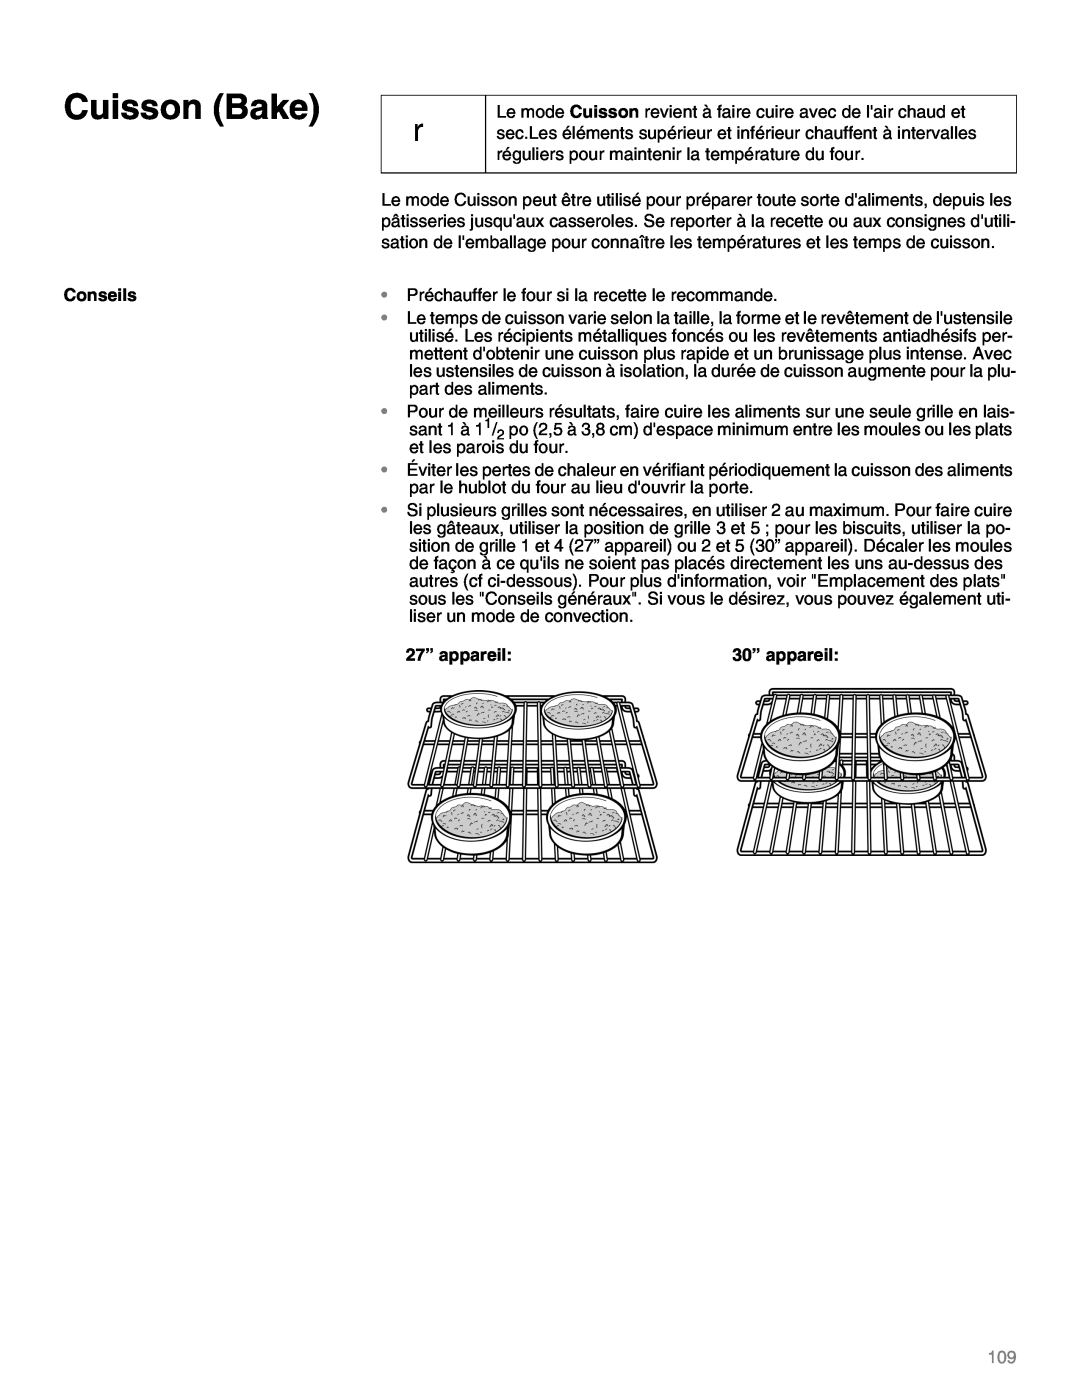 Thermador M301E, M271E manual Cuisson Bake, Conseils, 27” appareil 